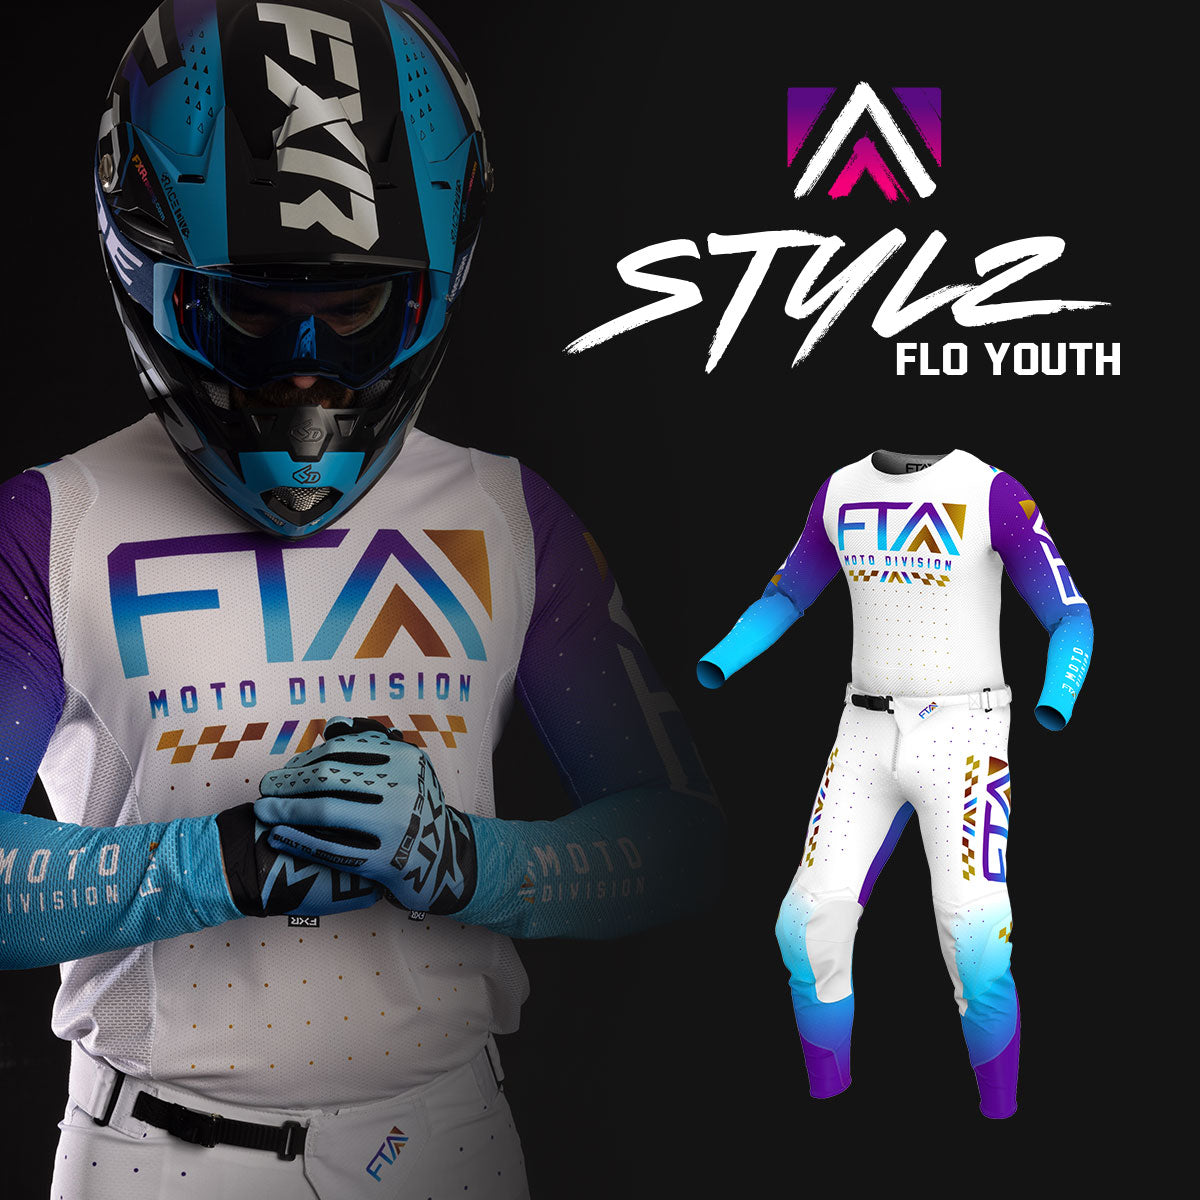 Image showing 3D images of FTA's Stylz Flo Youth Kit